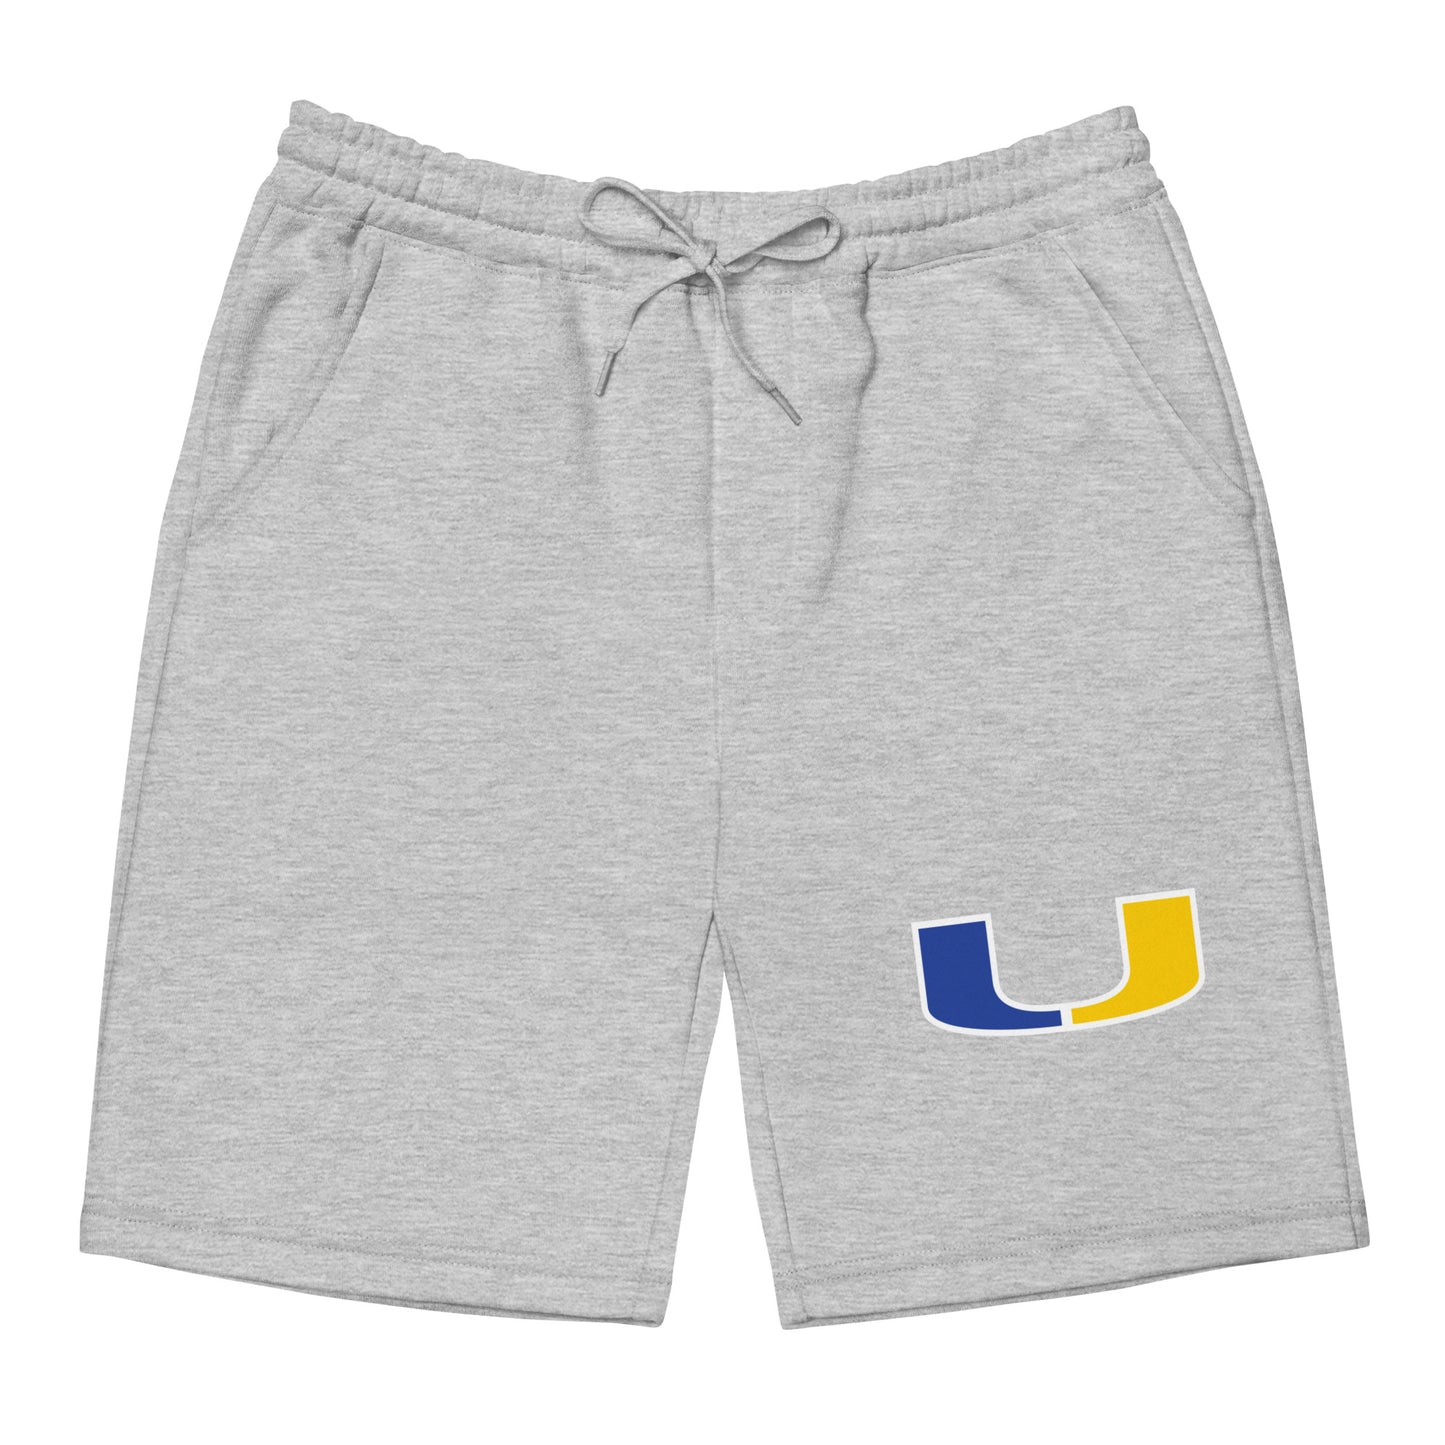 Redford Union Gray fleece shorts